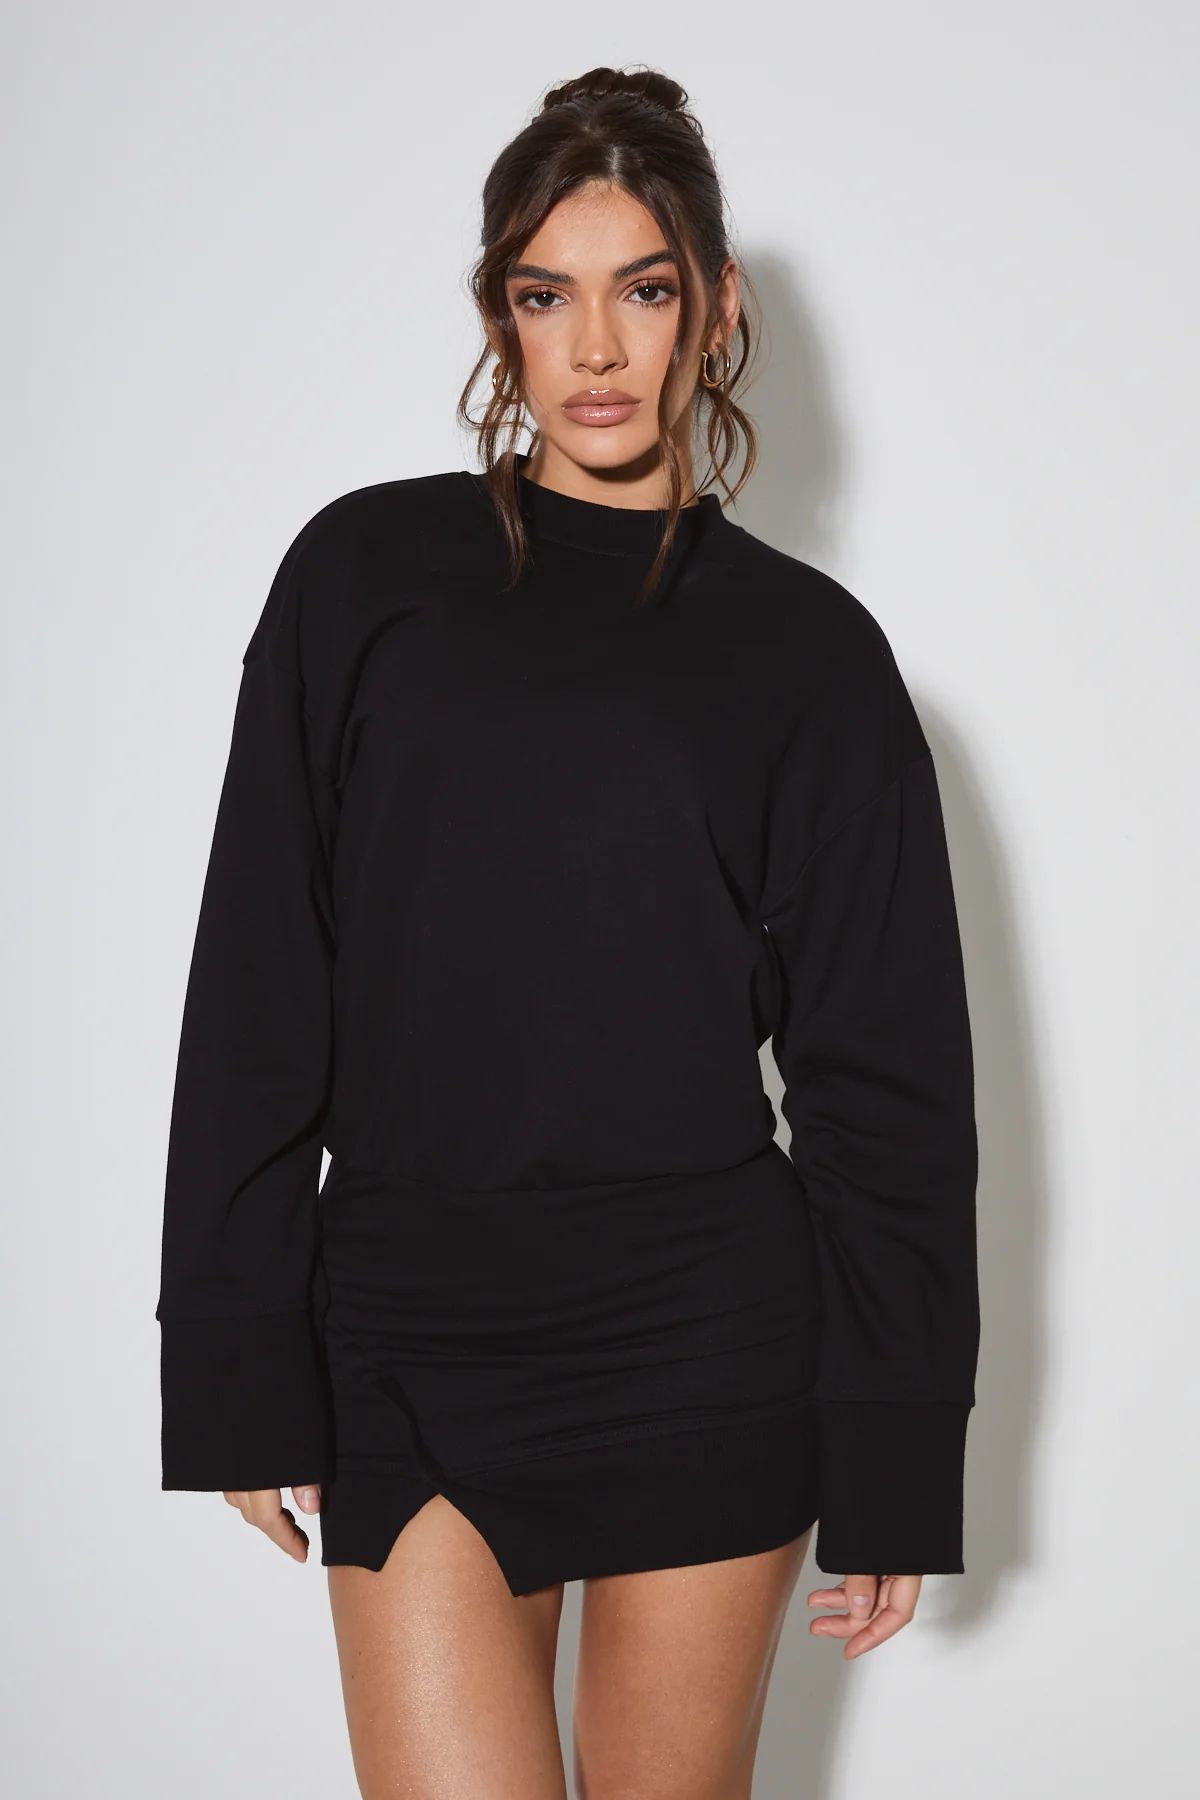 CELIA Black Jersey Jumper Dress | Noughts and Kisses